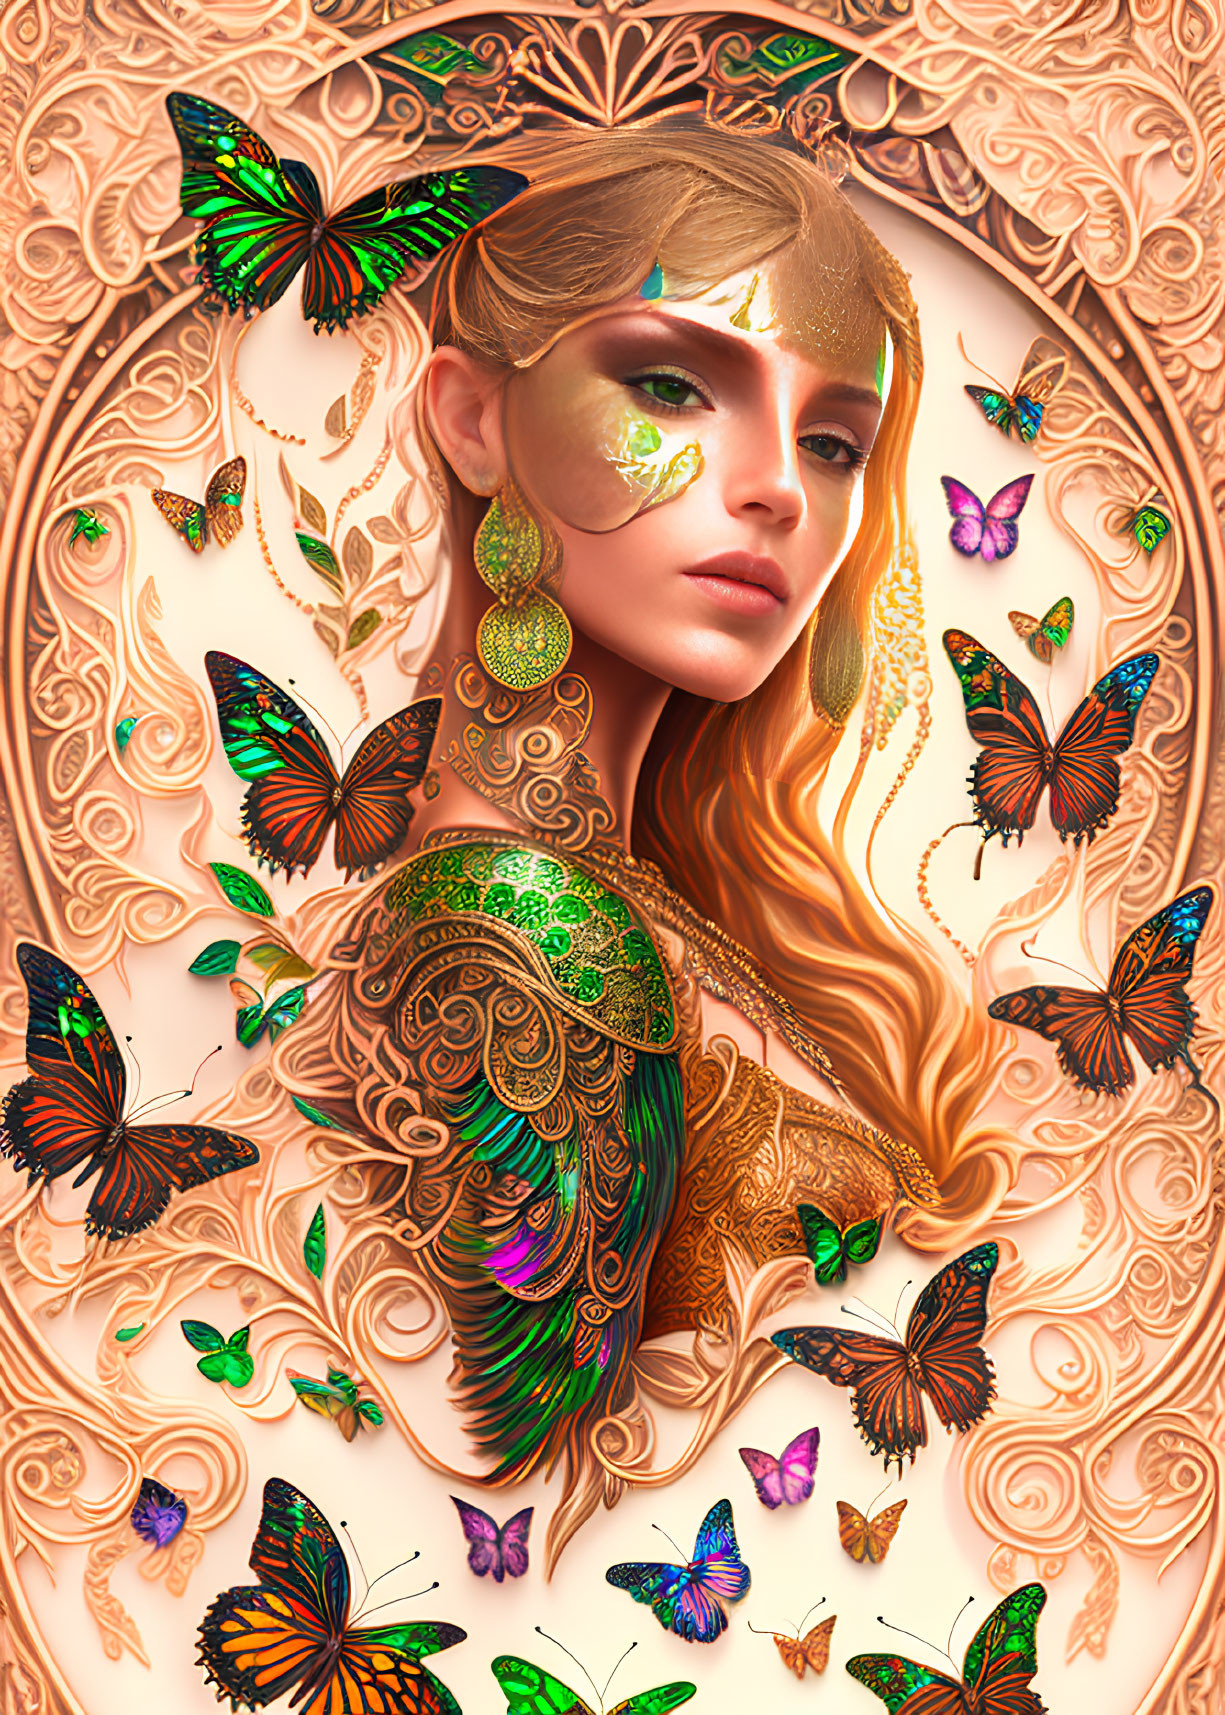 Vibrant digital artwork: Woman with golden hair, peacock attire, butterflies, ornate background